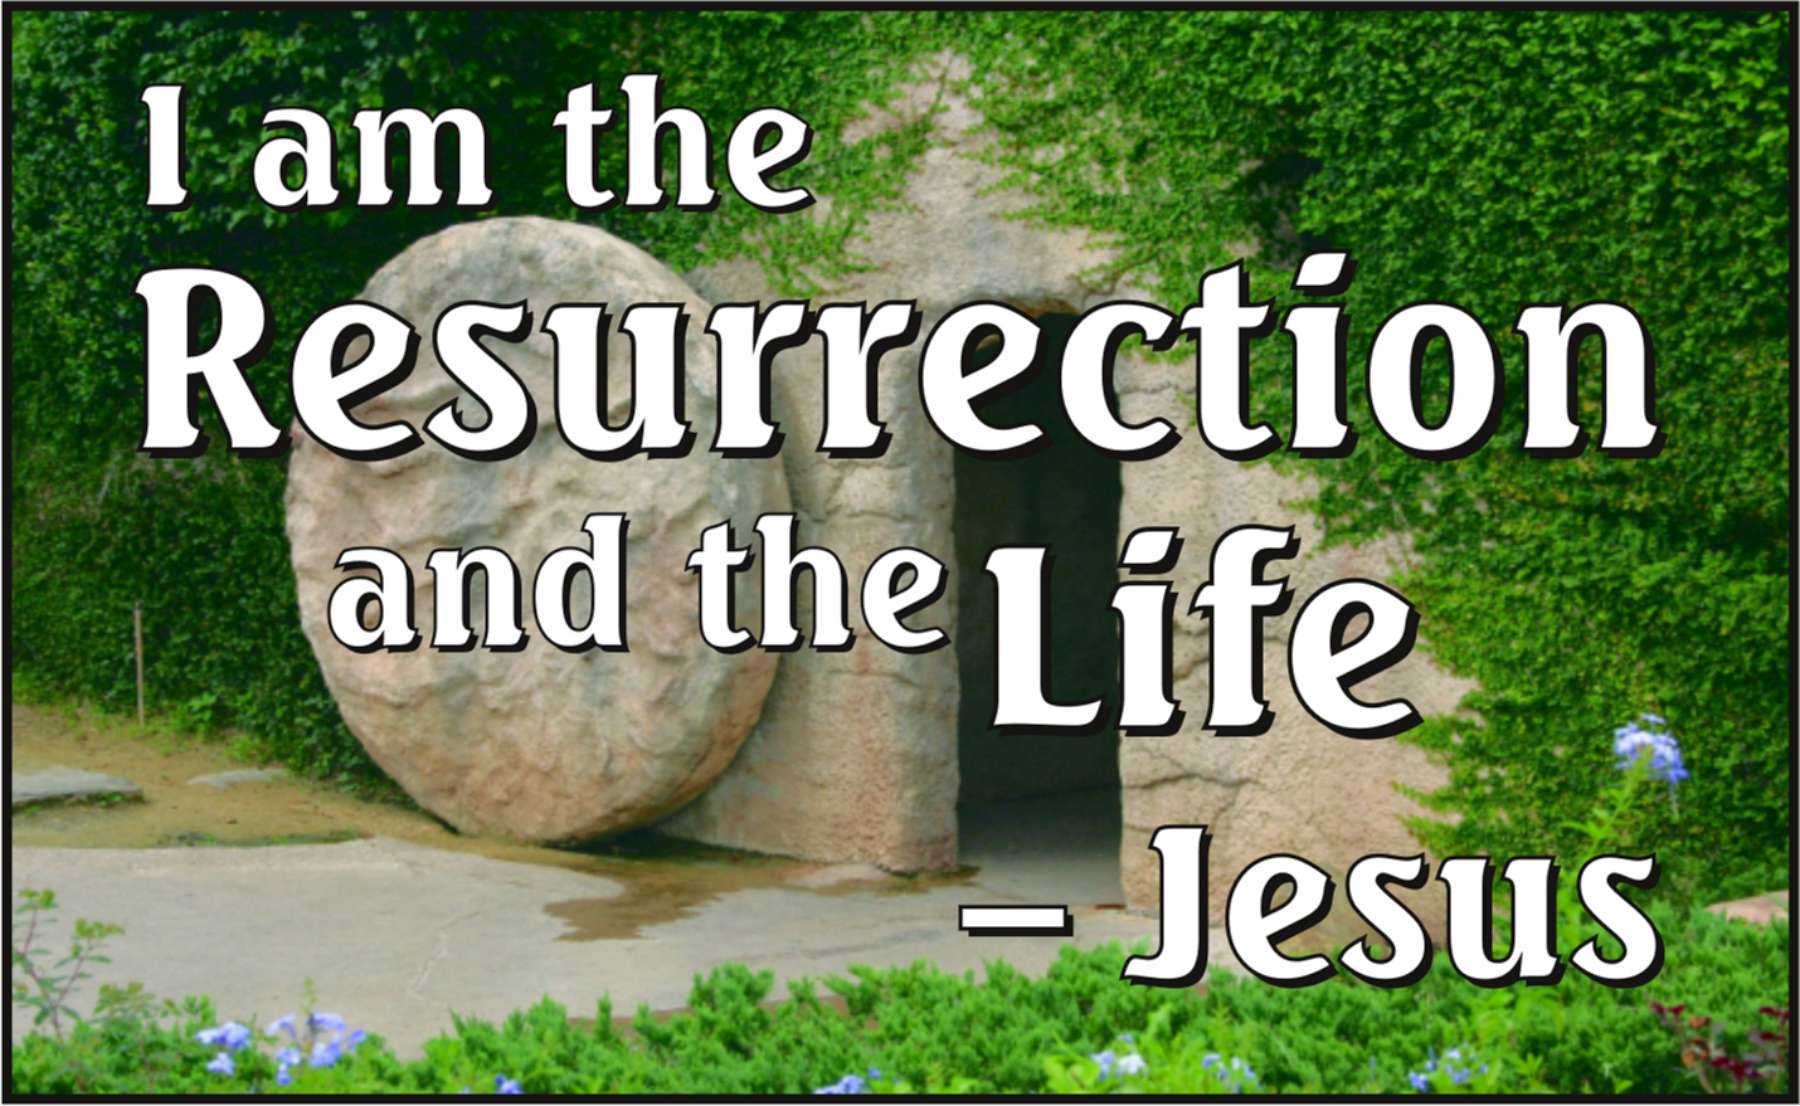 Resurrection and life photo